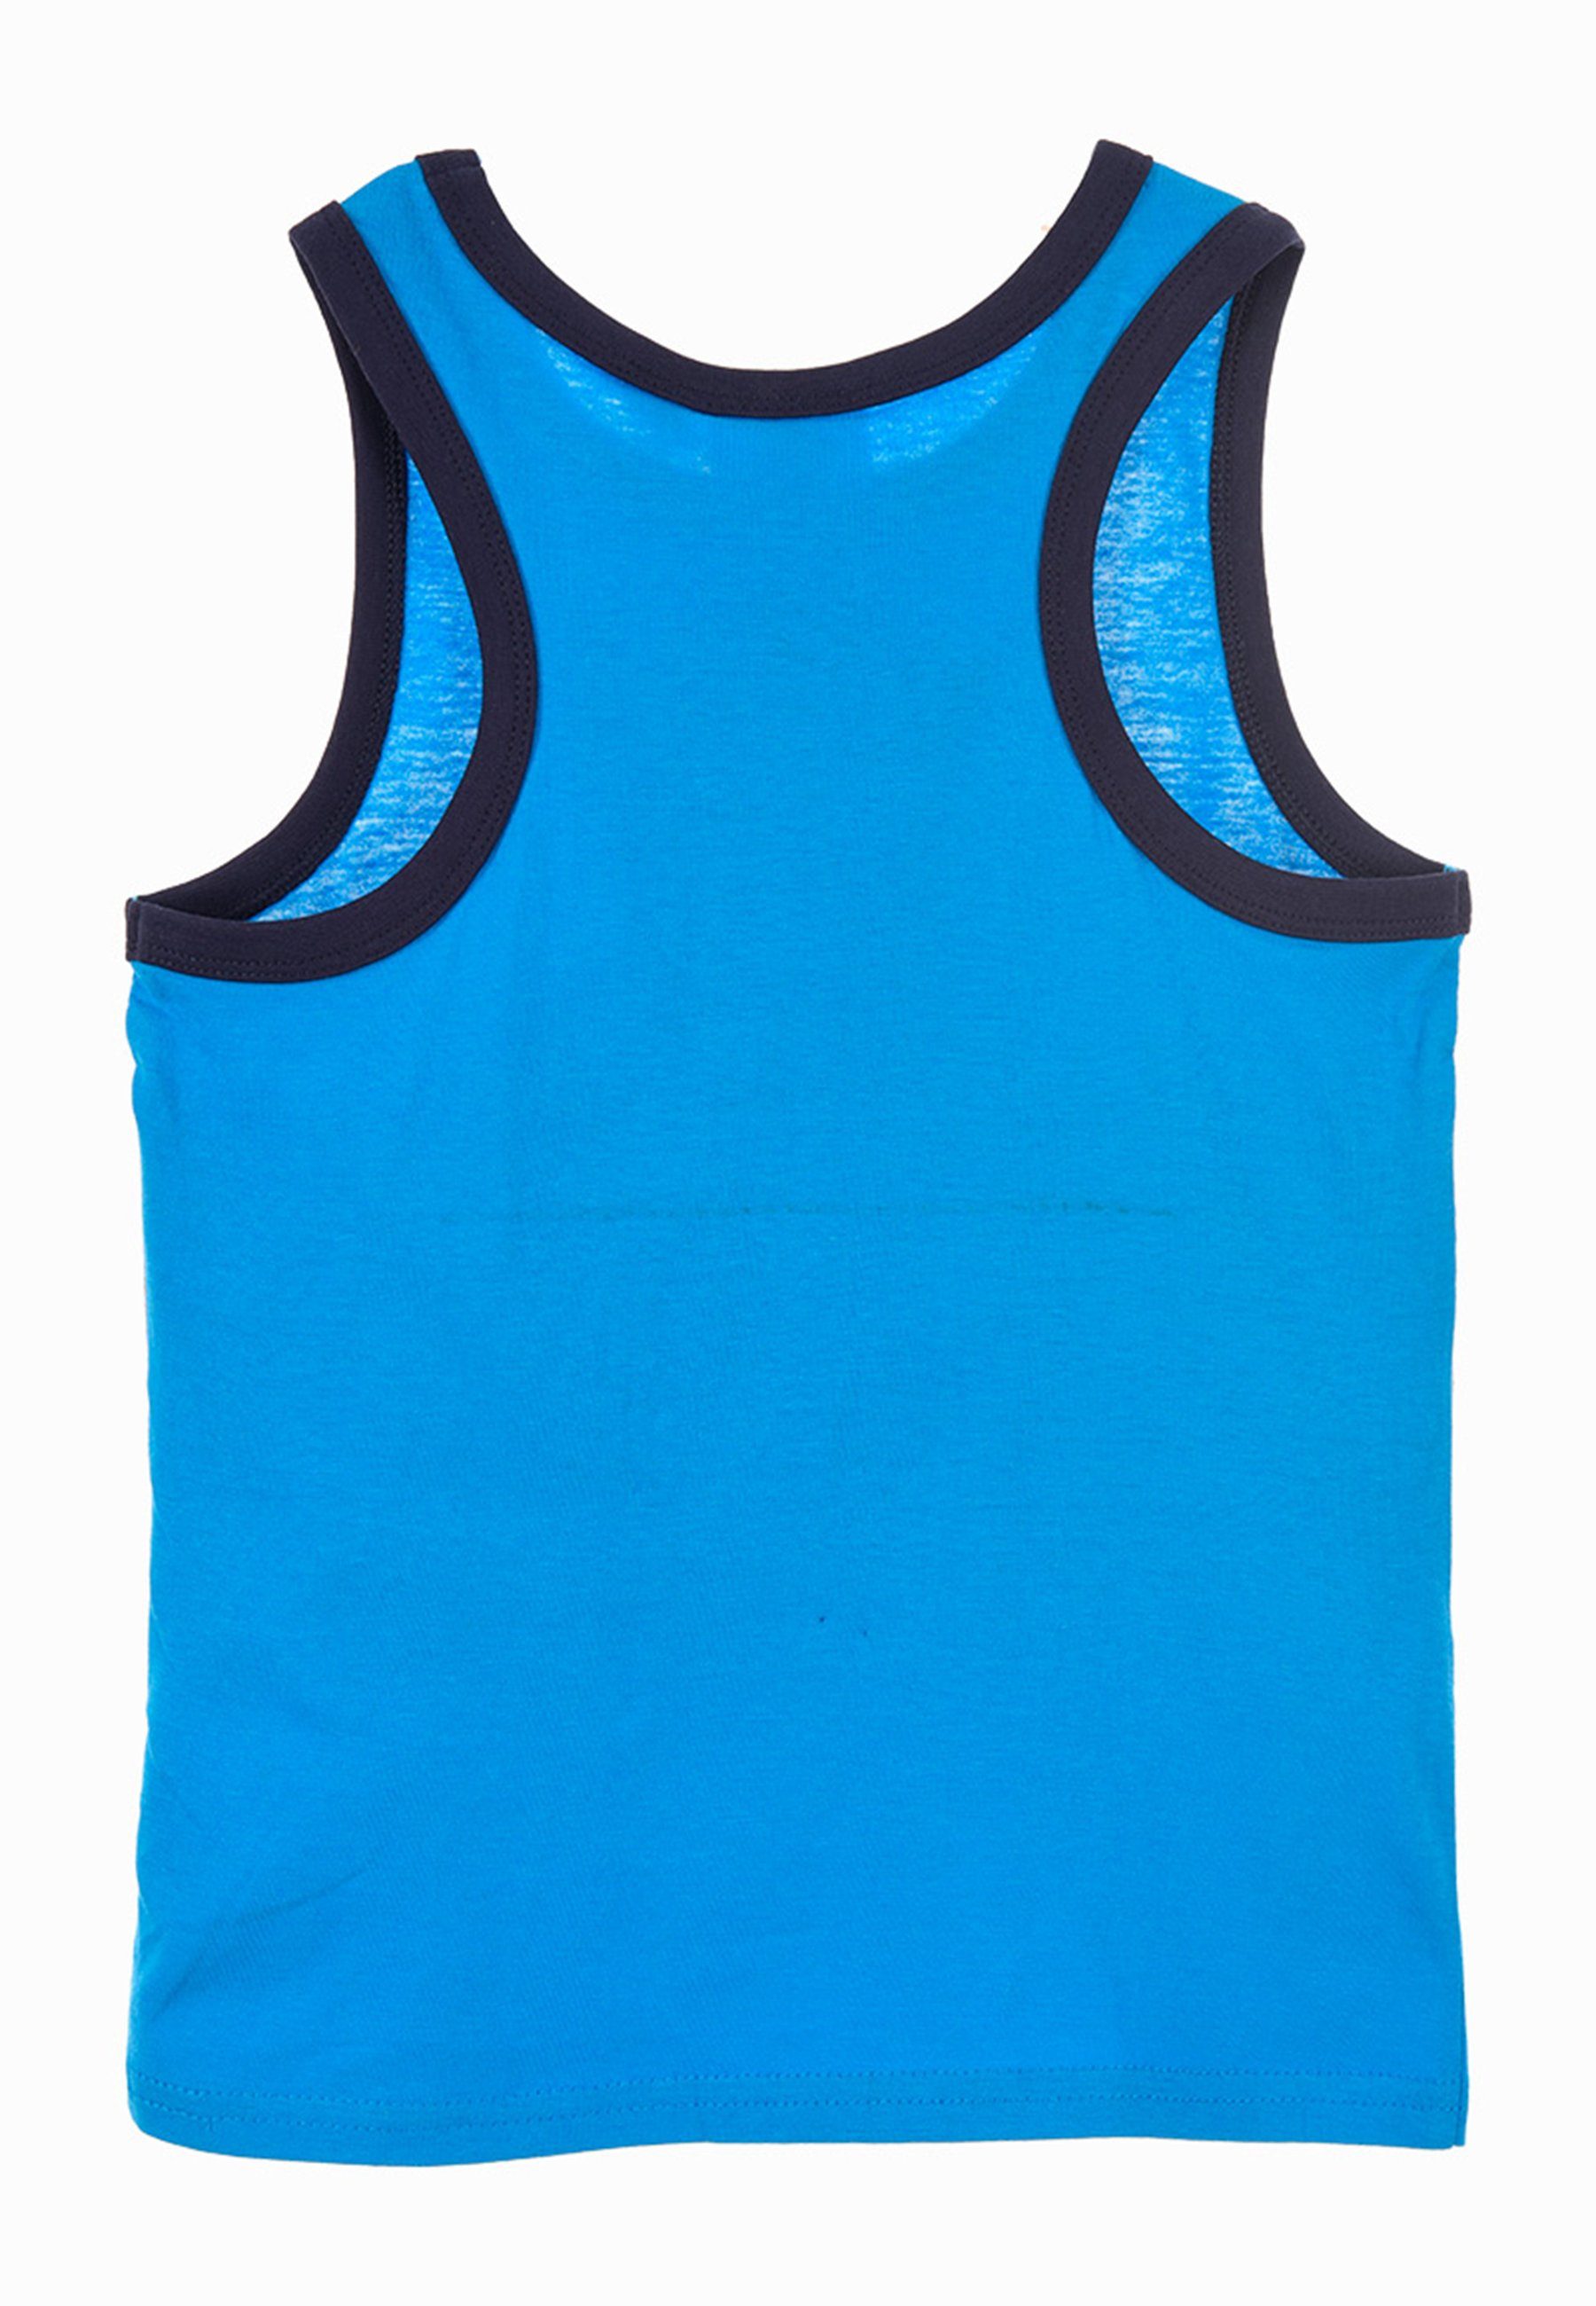 PAW PATROL Muskelshirt Jungen Tank-Top Blau Sommer-Shirt Muskel-Shirt